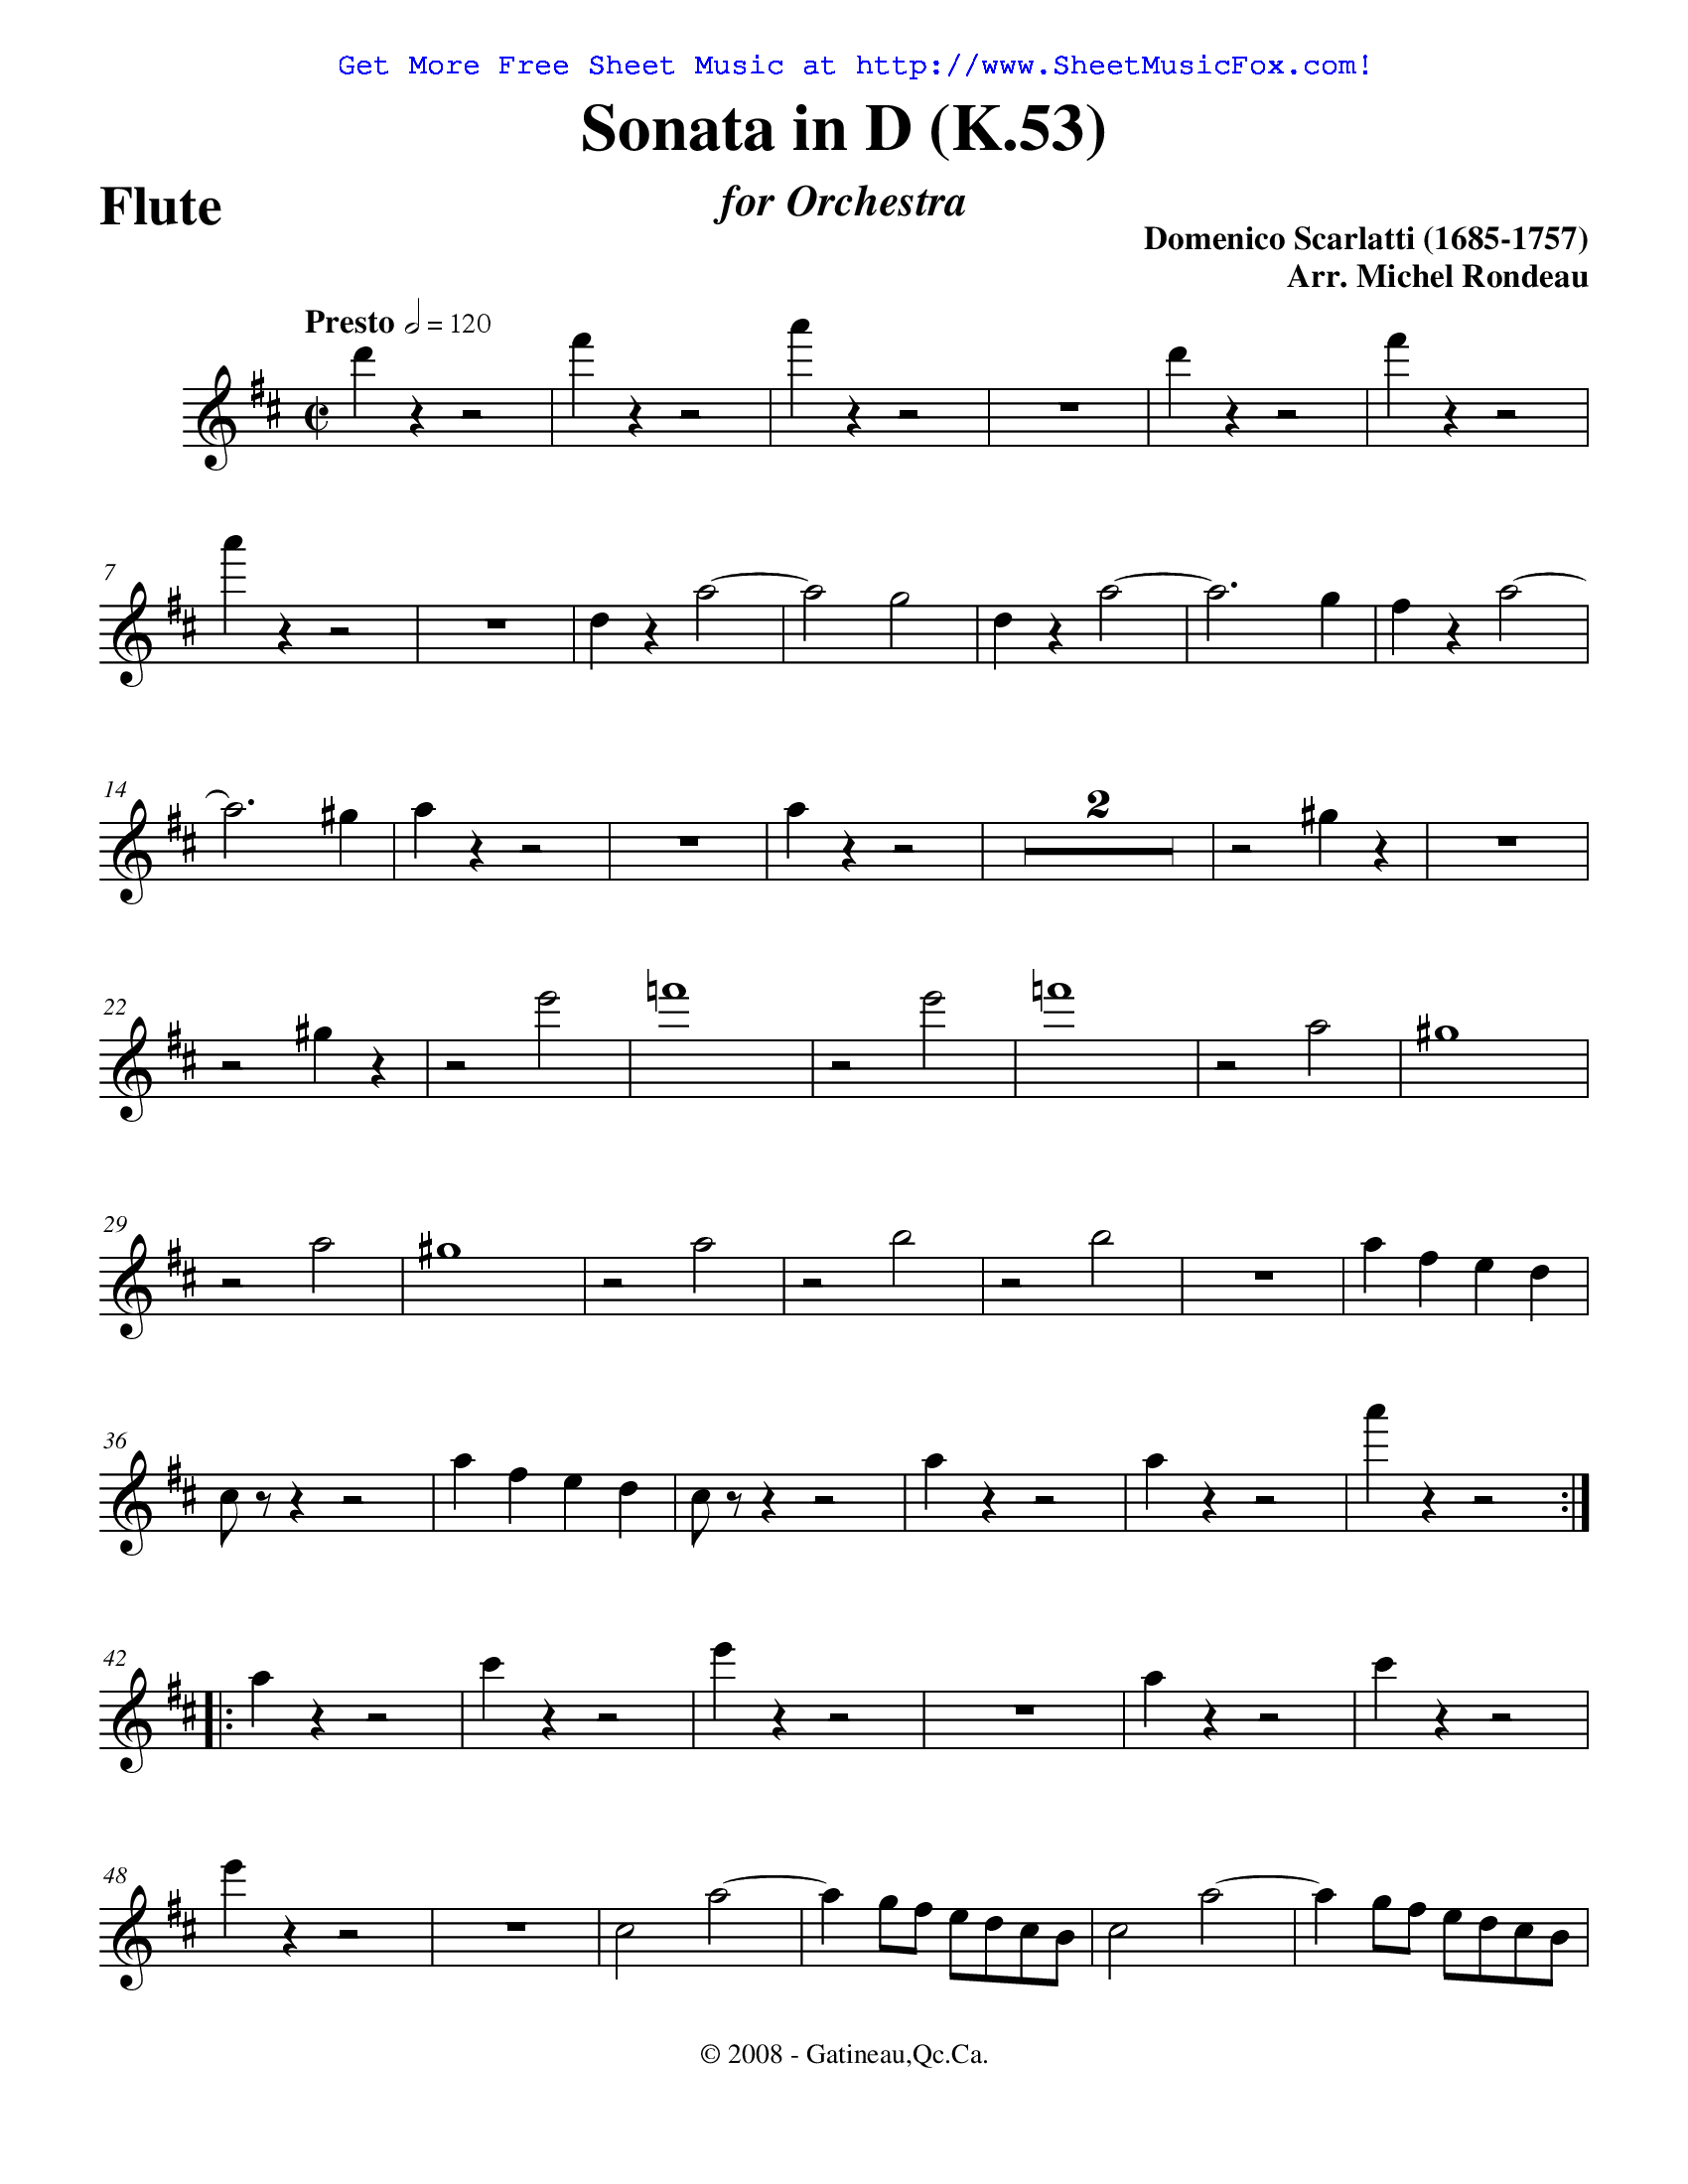 scarlatti sonatas sheet music